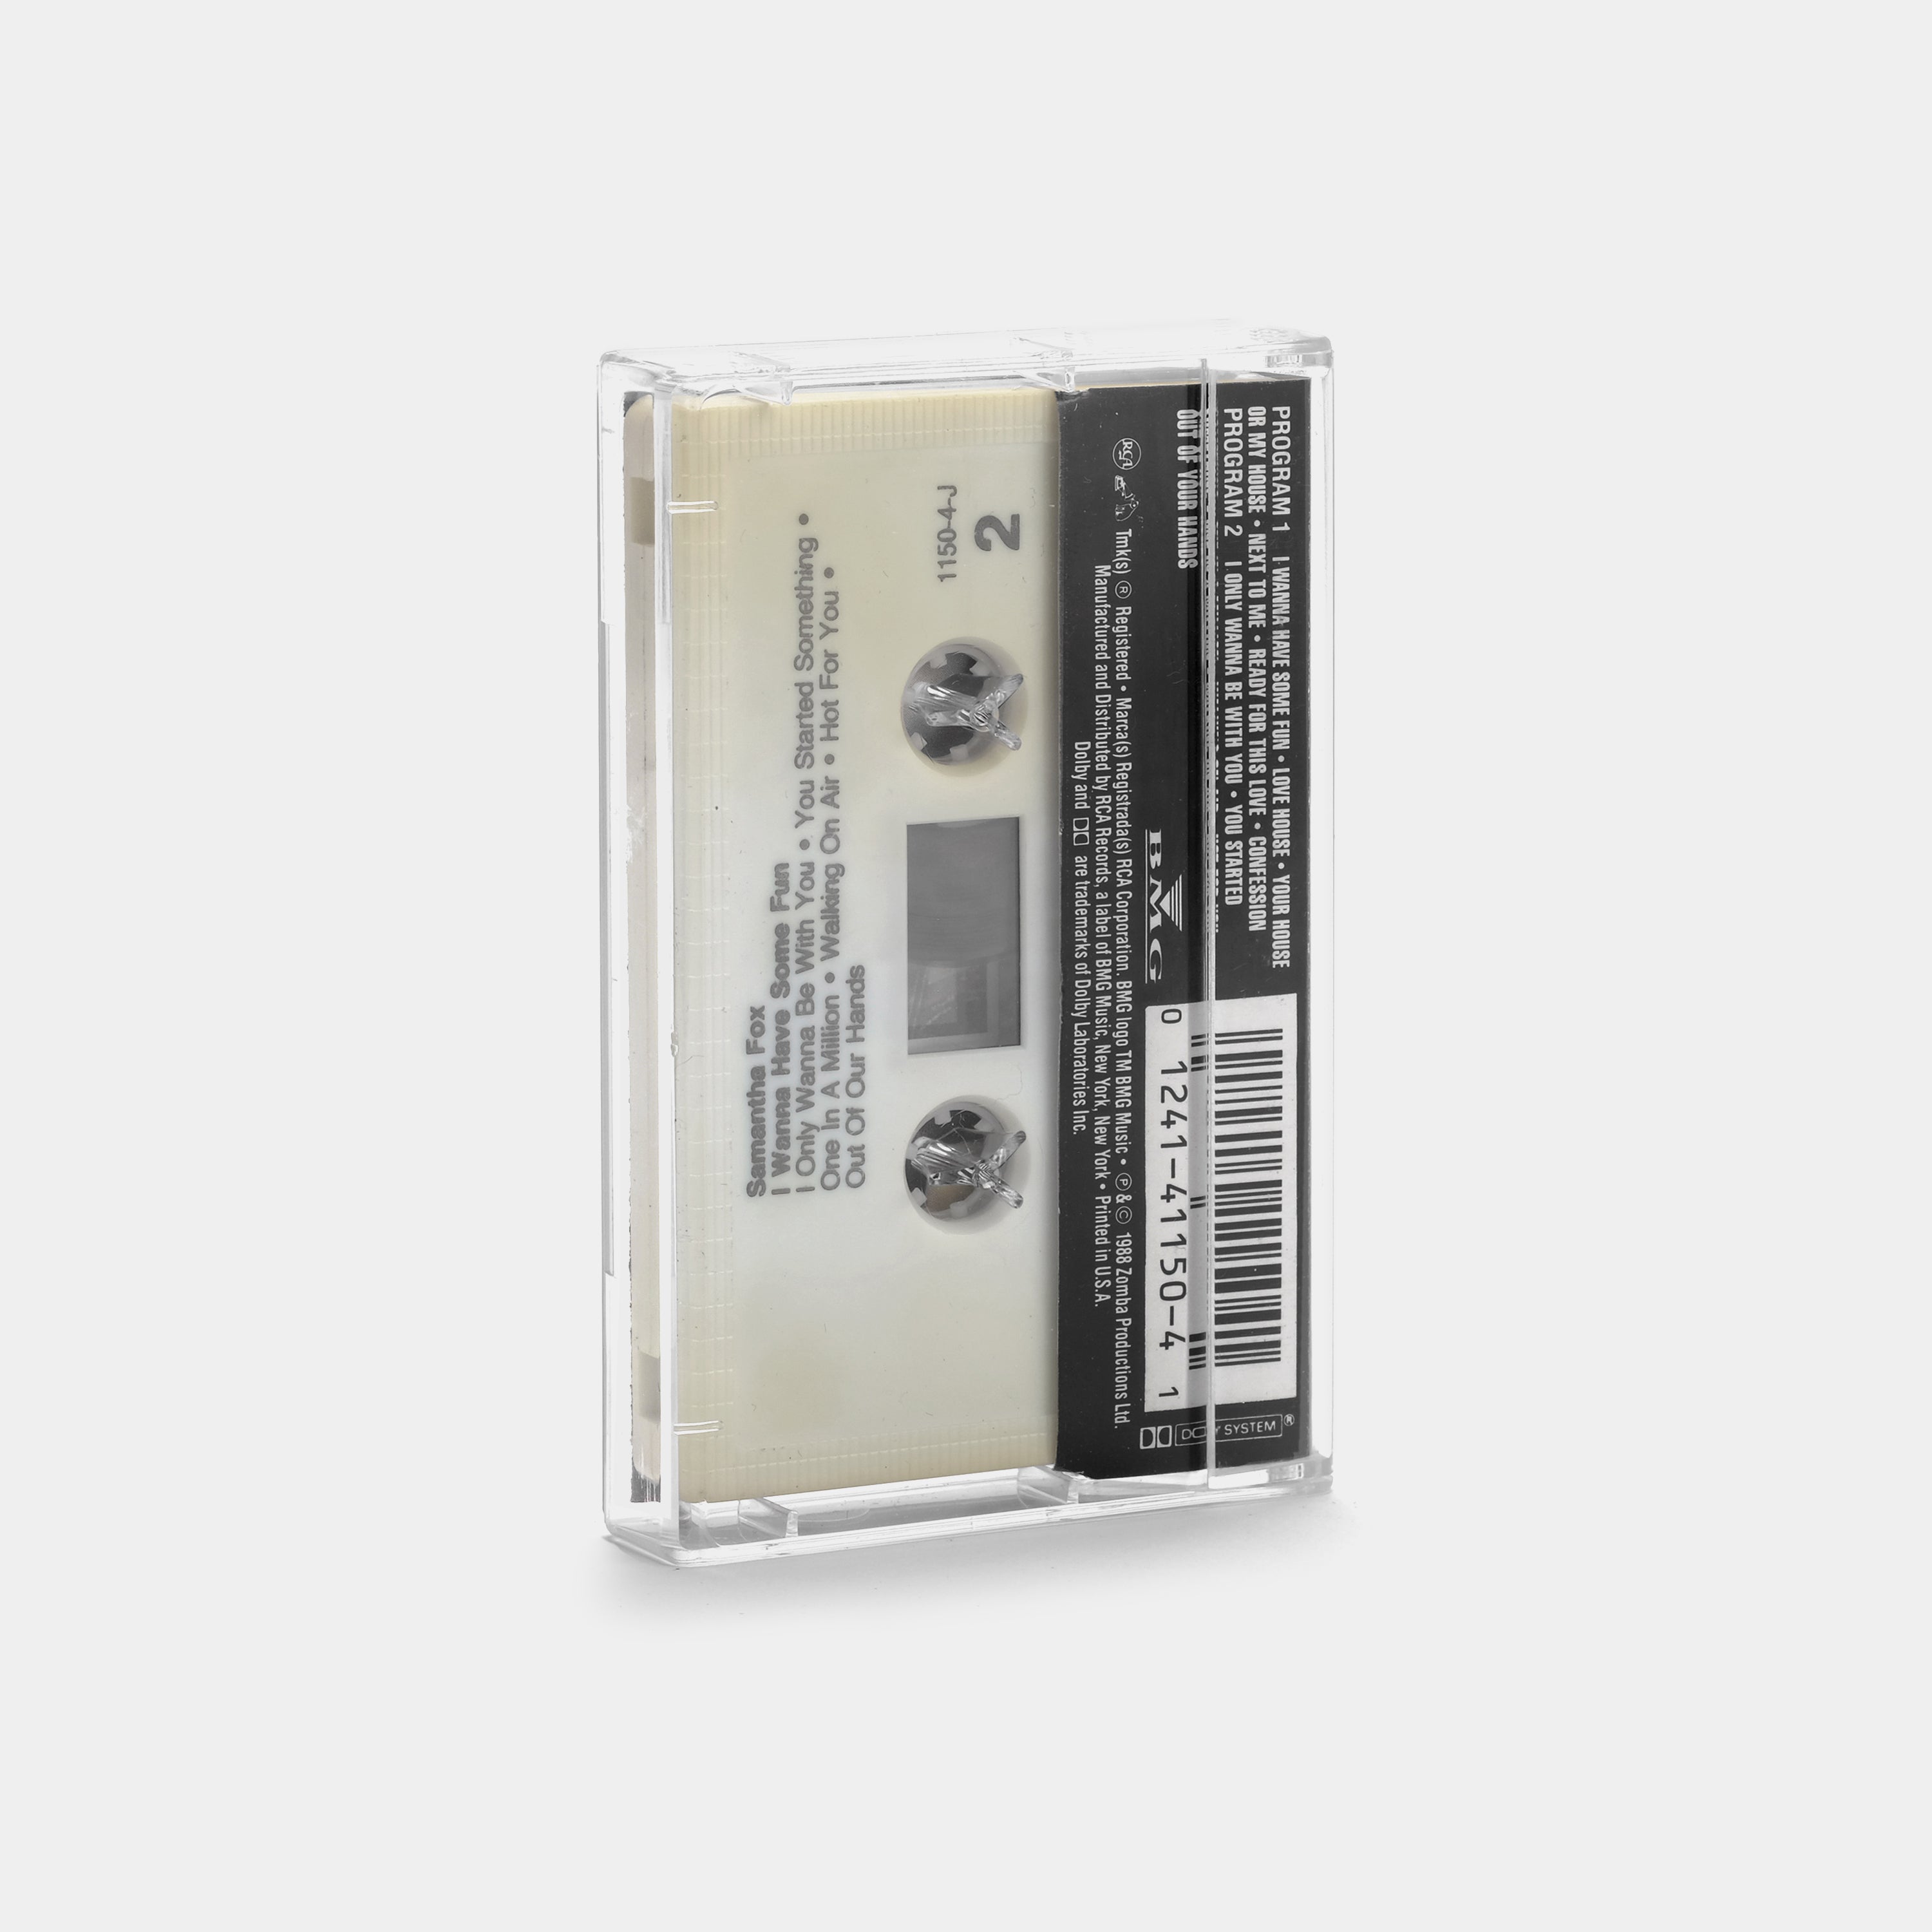 Samantha Fox - I Wanna Have Some Fun Cassette Tape